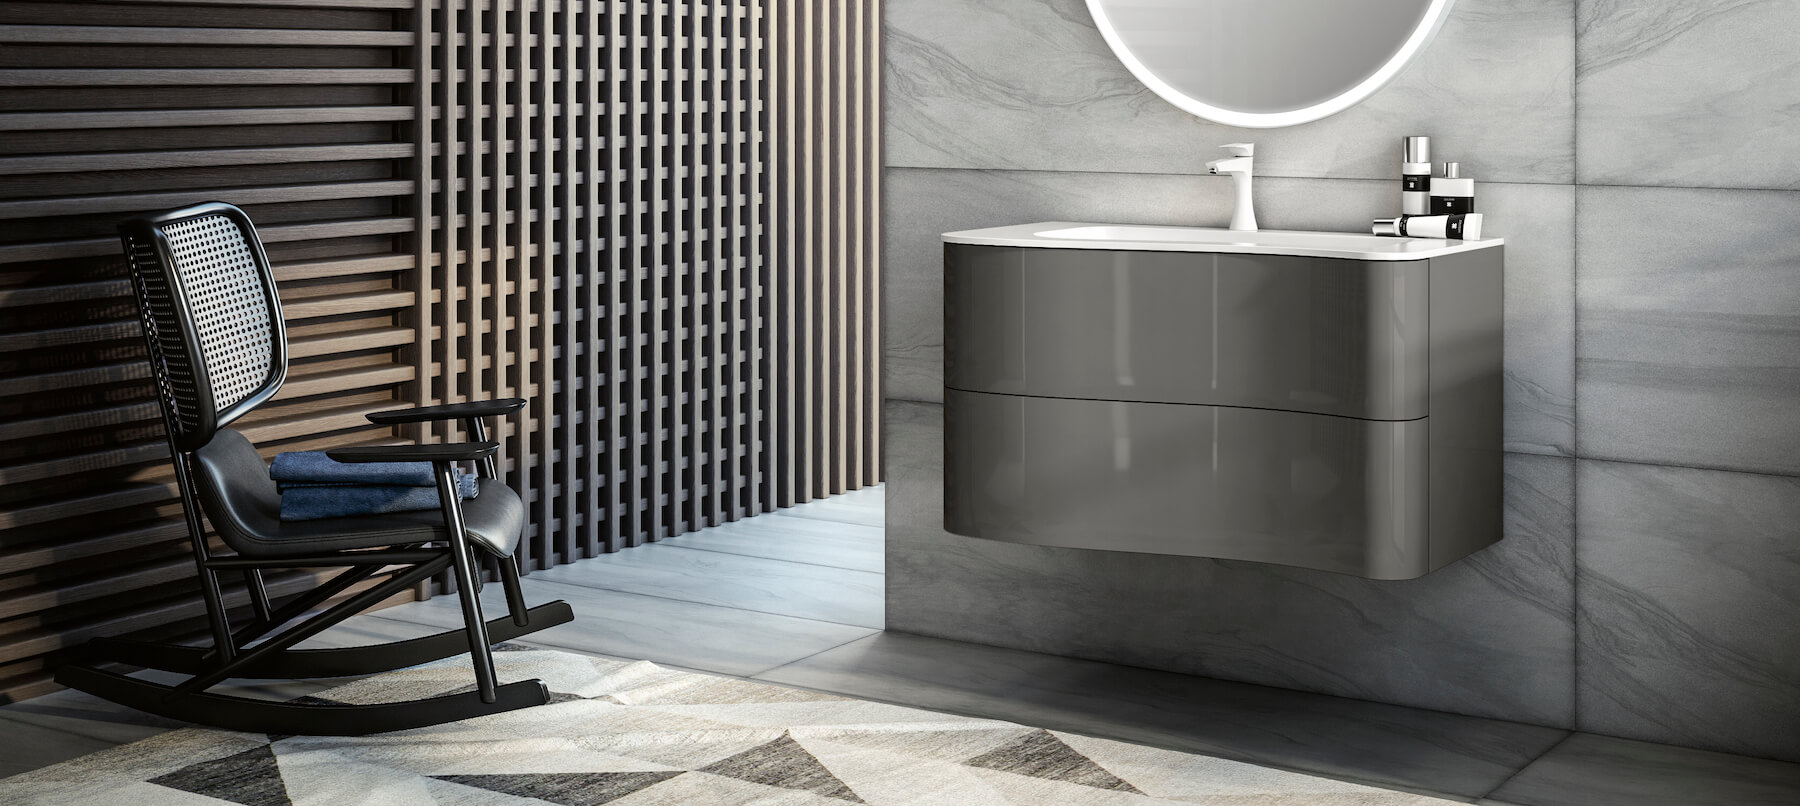 Onda bathroom vanity in grey with white countertop